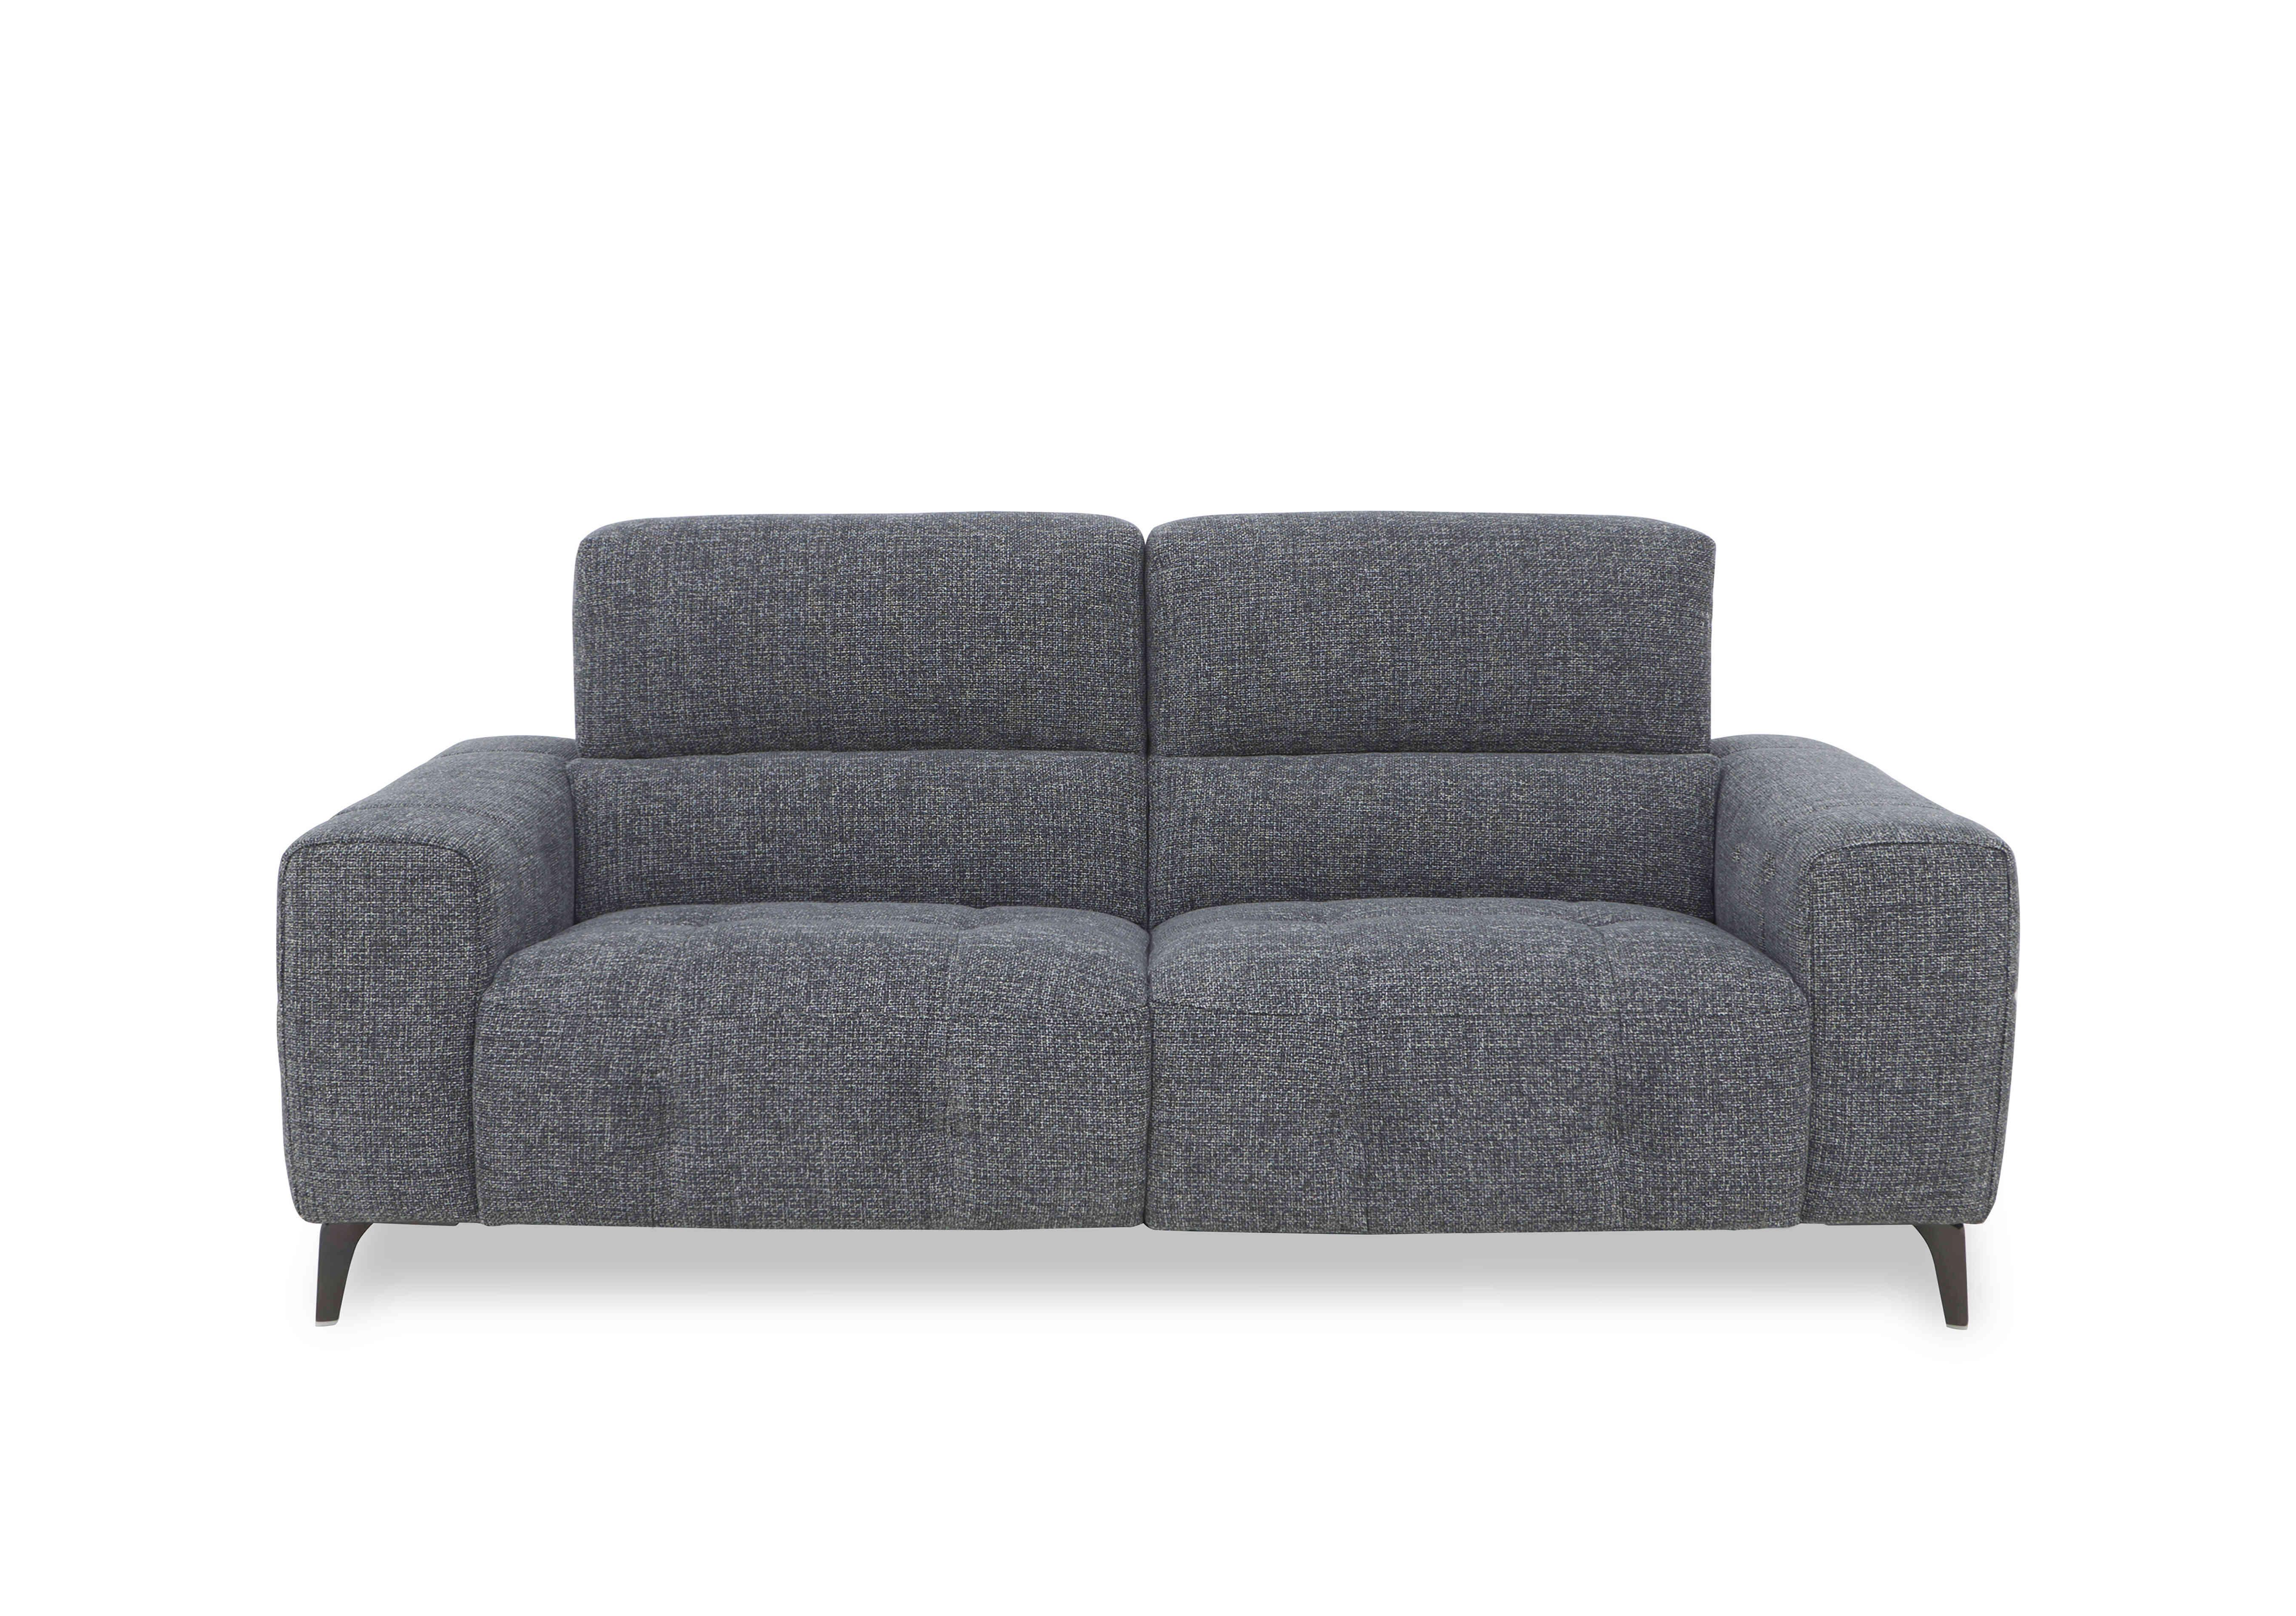 New York 3 Seater Fabric Sofa in Fab-Cac-R450 Gun Metal on Furniture Village